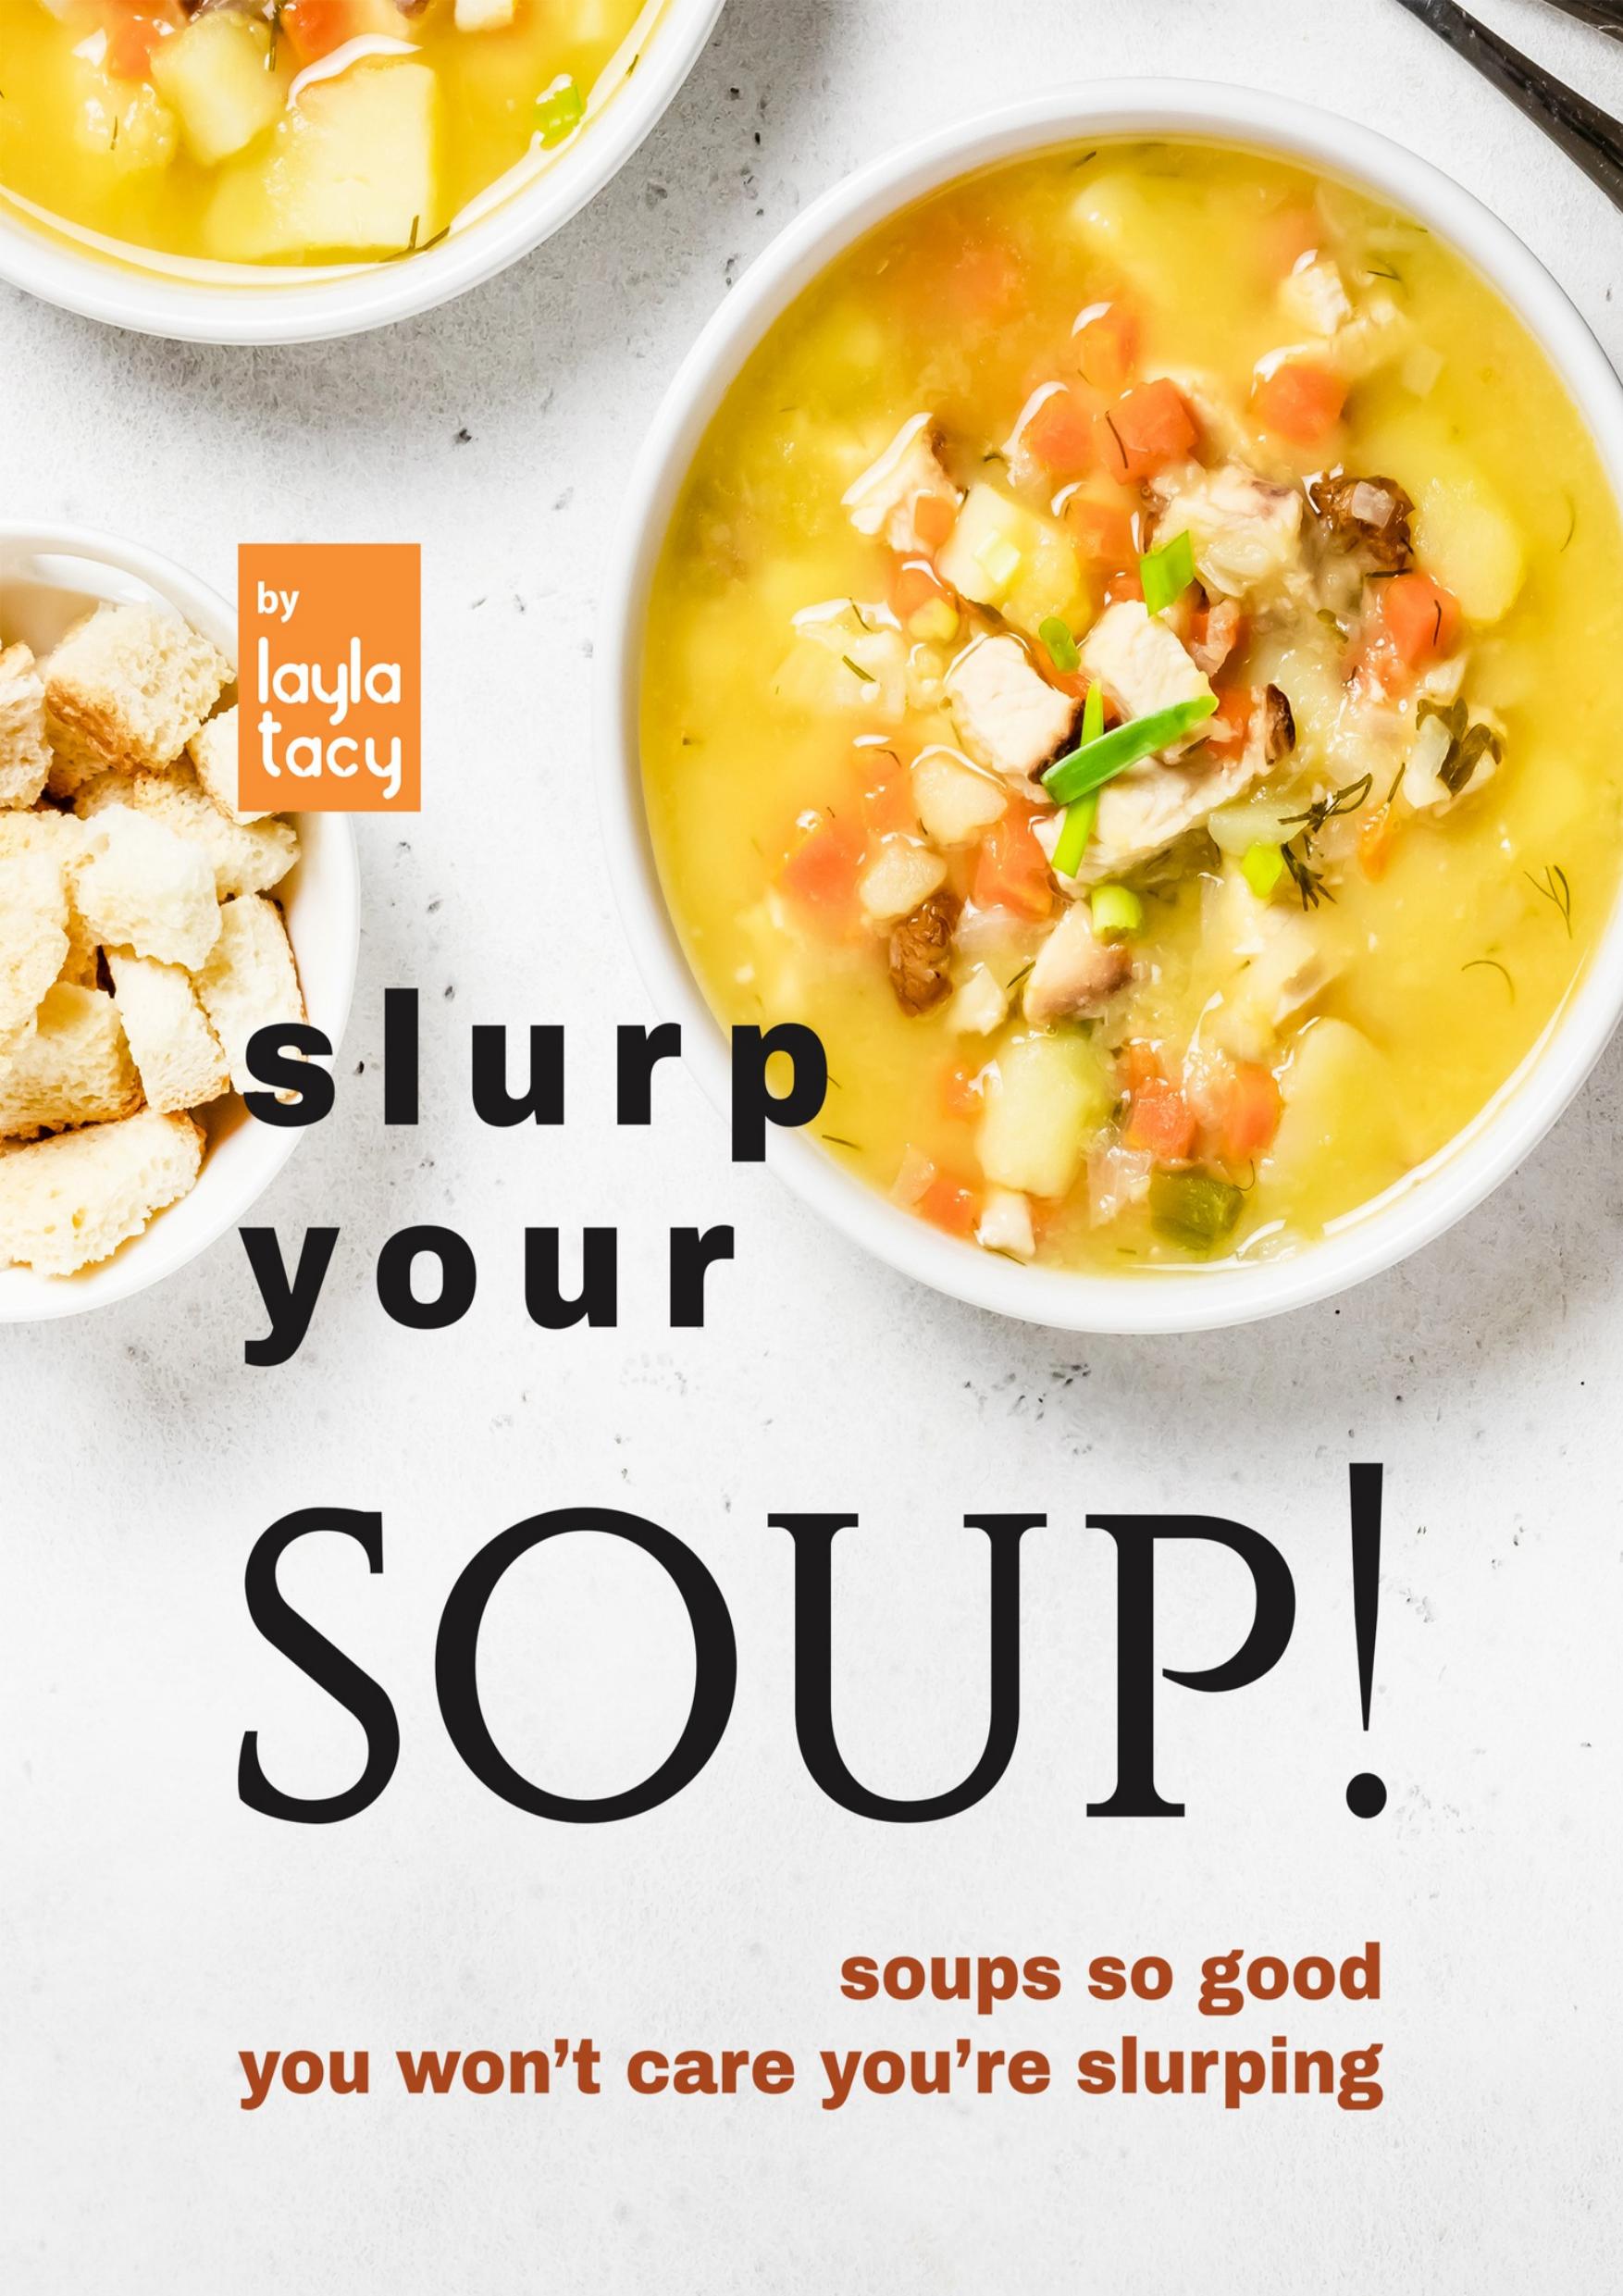 Slurp Your Soup!: Soups So Good You Won't Care You're Slurping by Tacy Layla